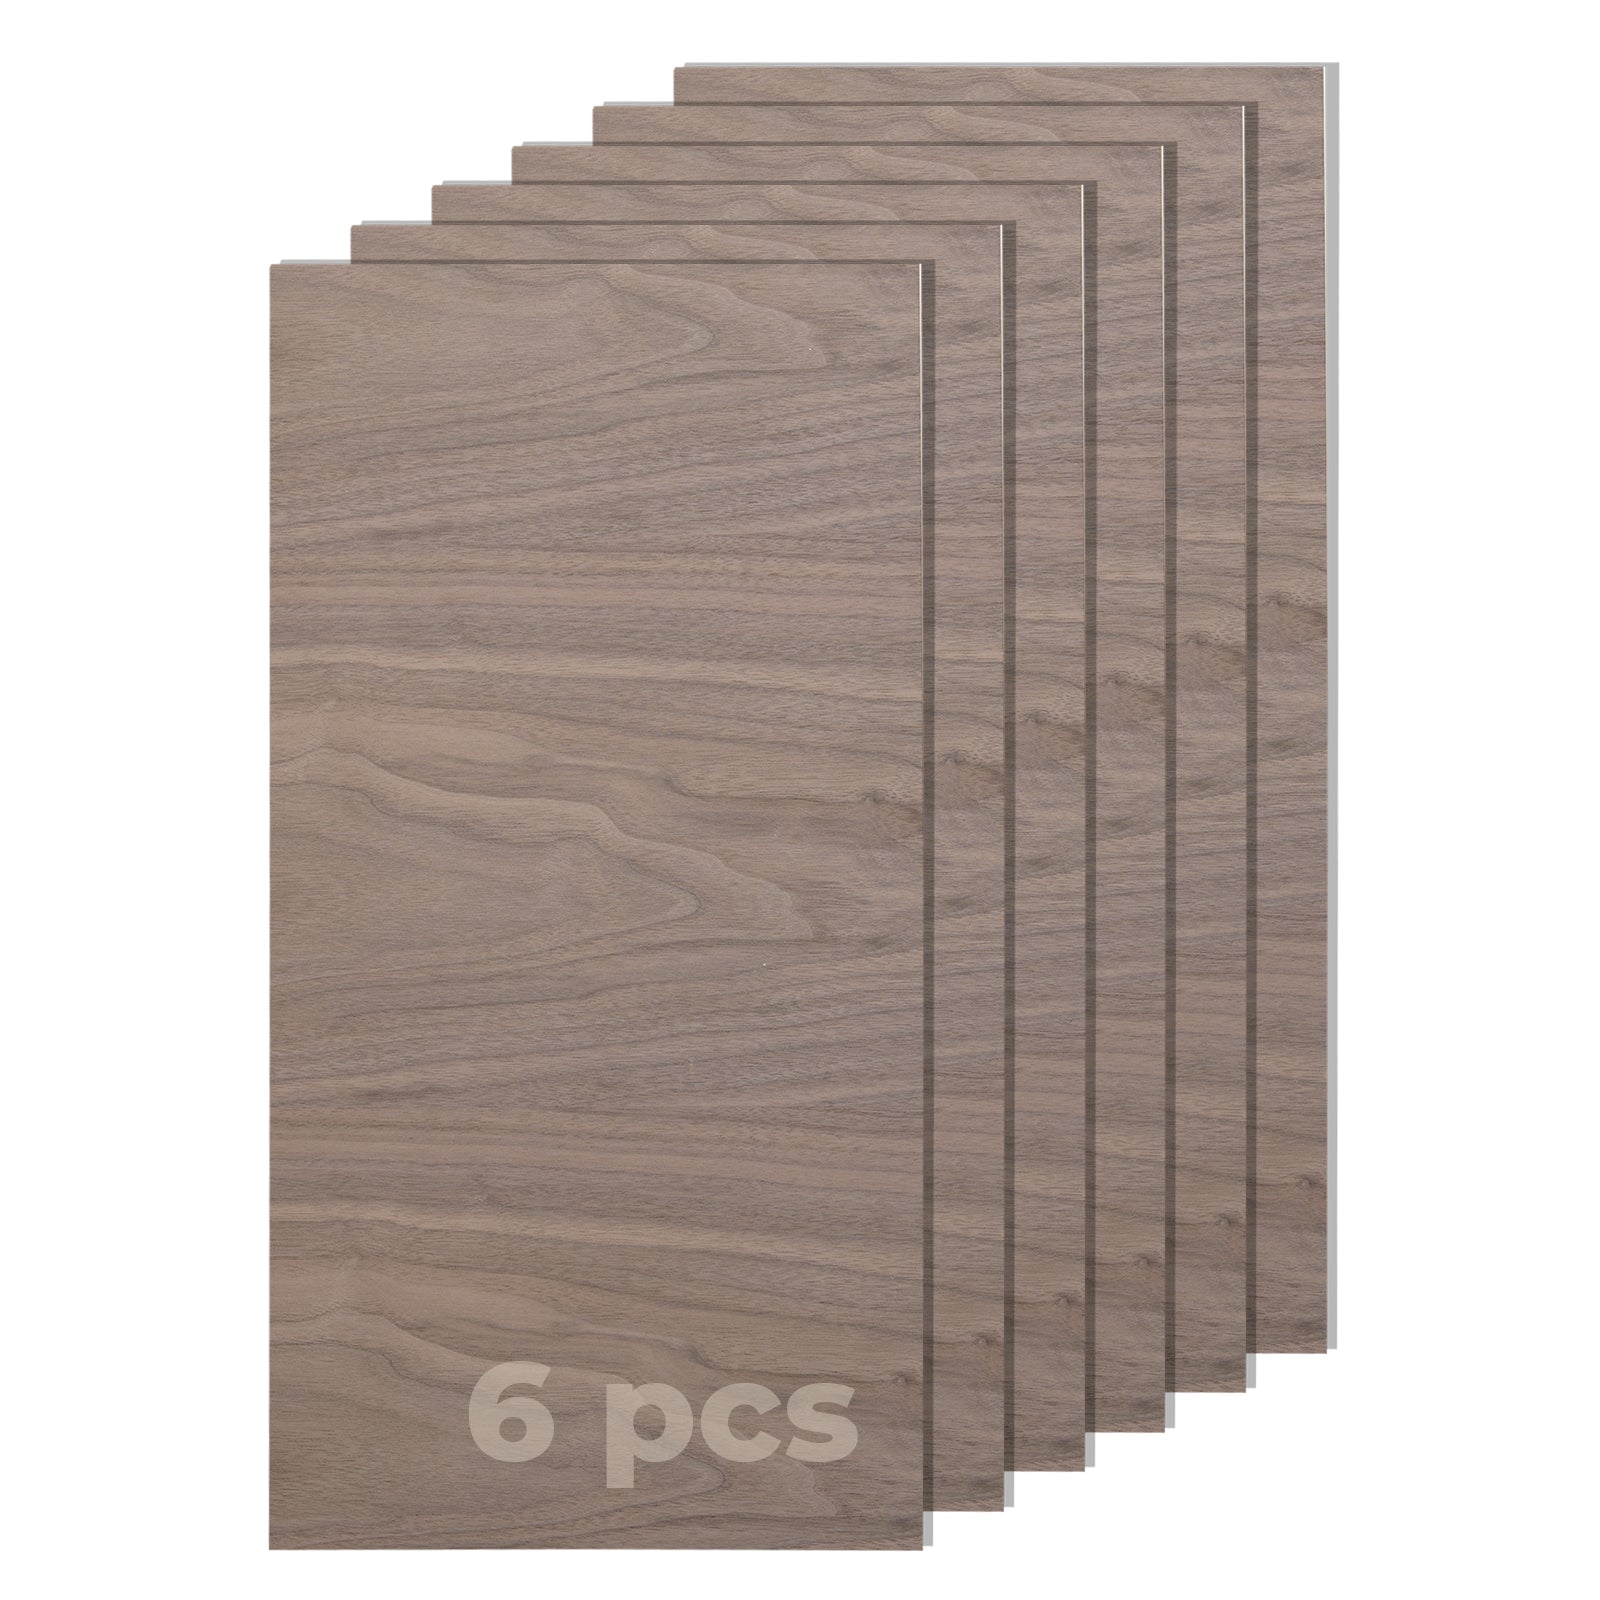 Walnut Plywood Sheets